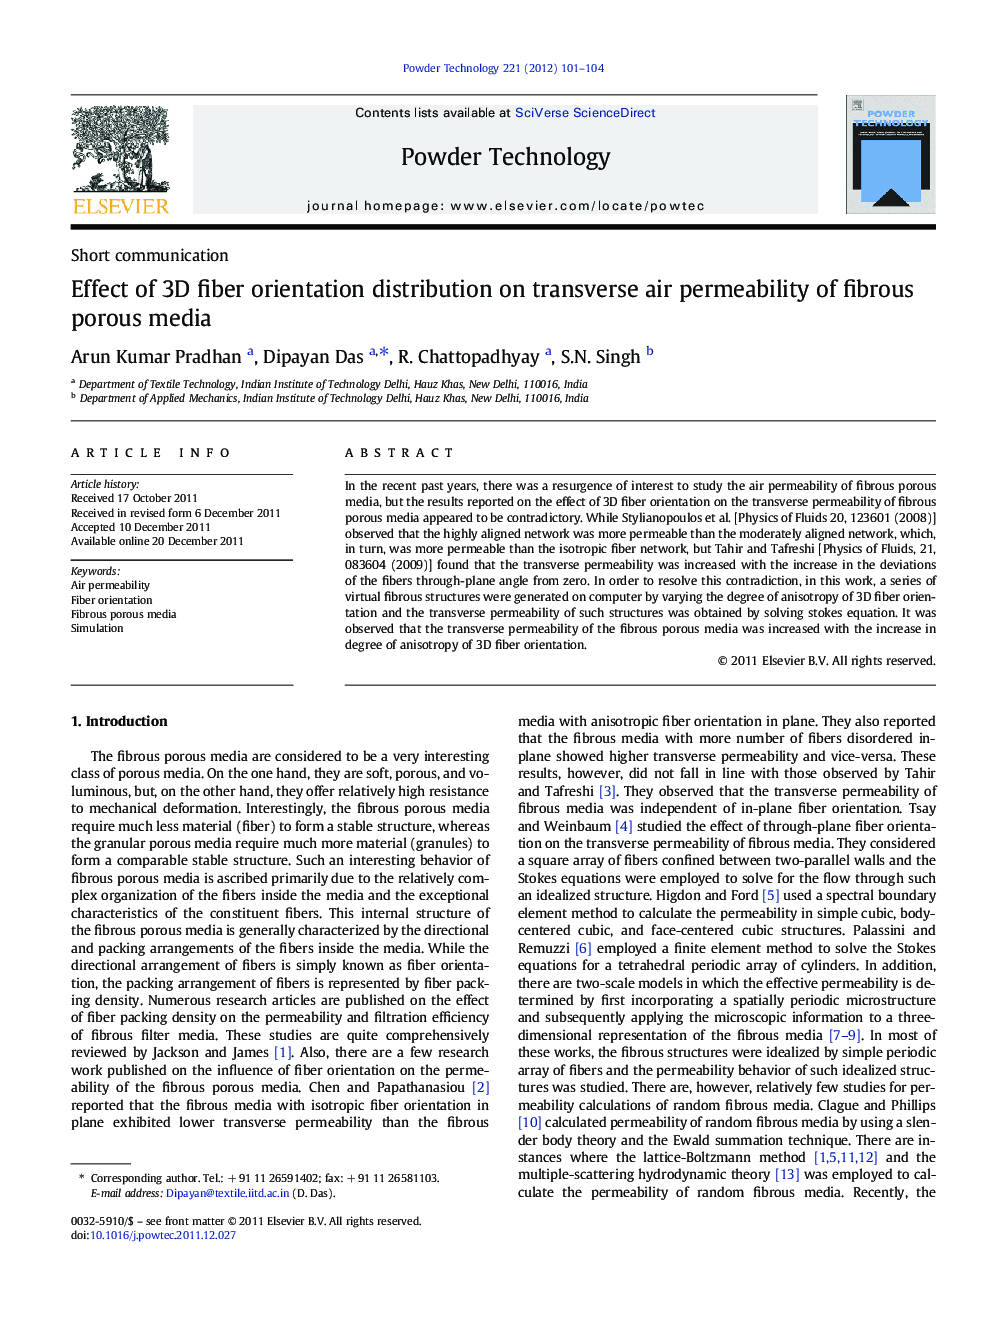 Effect of 3D fiber orientation distribution on transverse air permeability of fibrous porous media